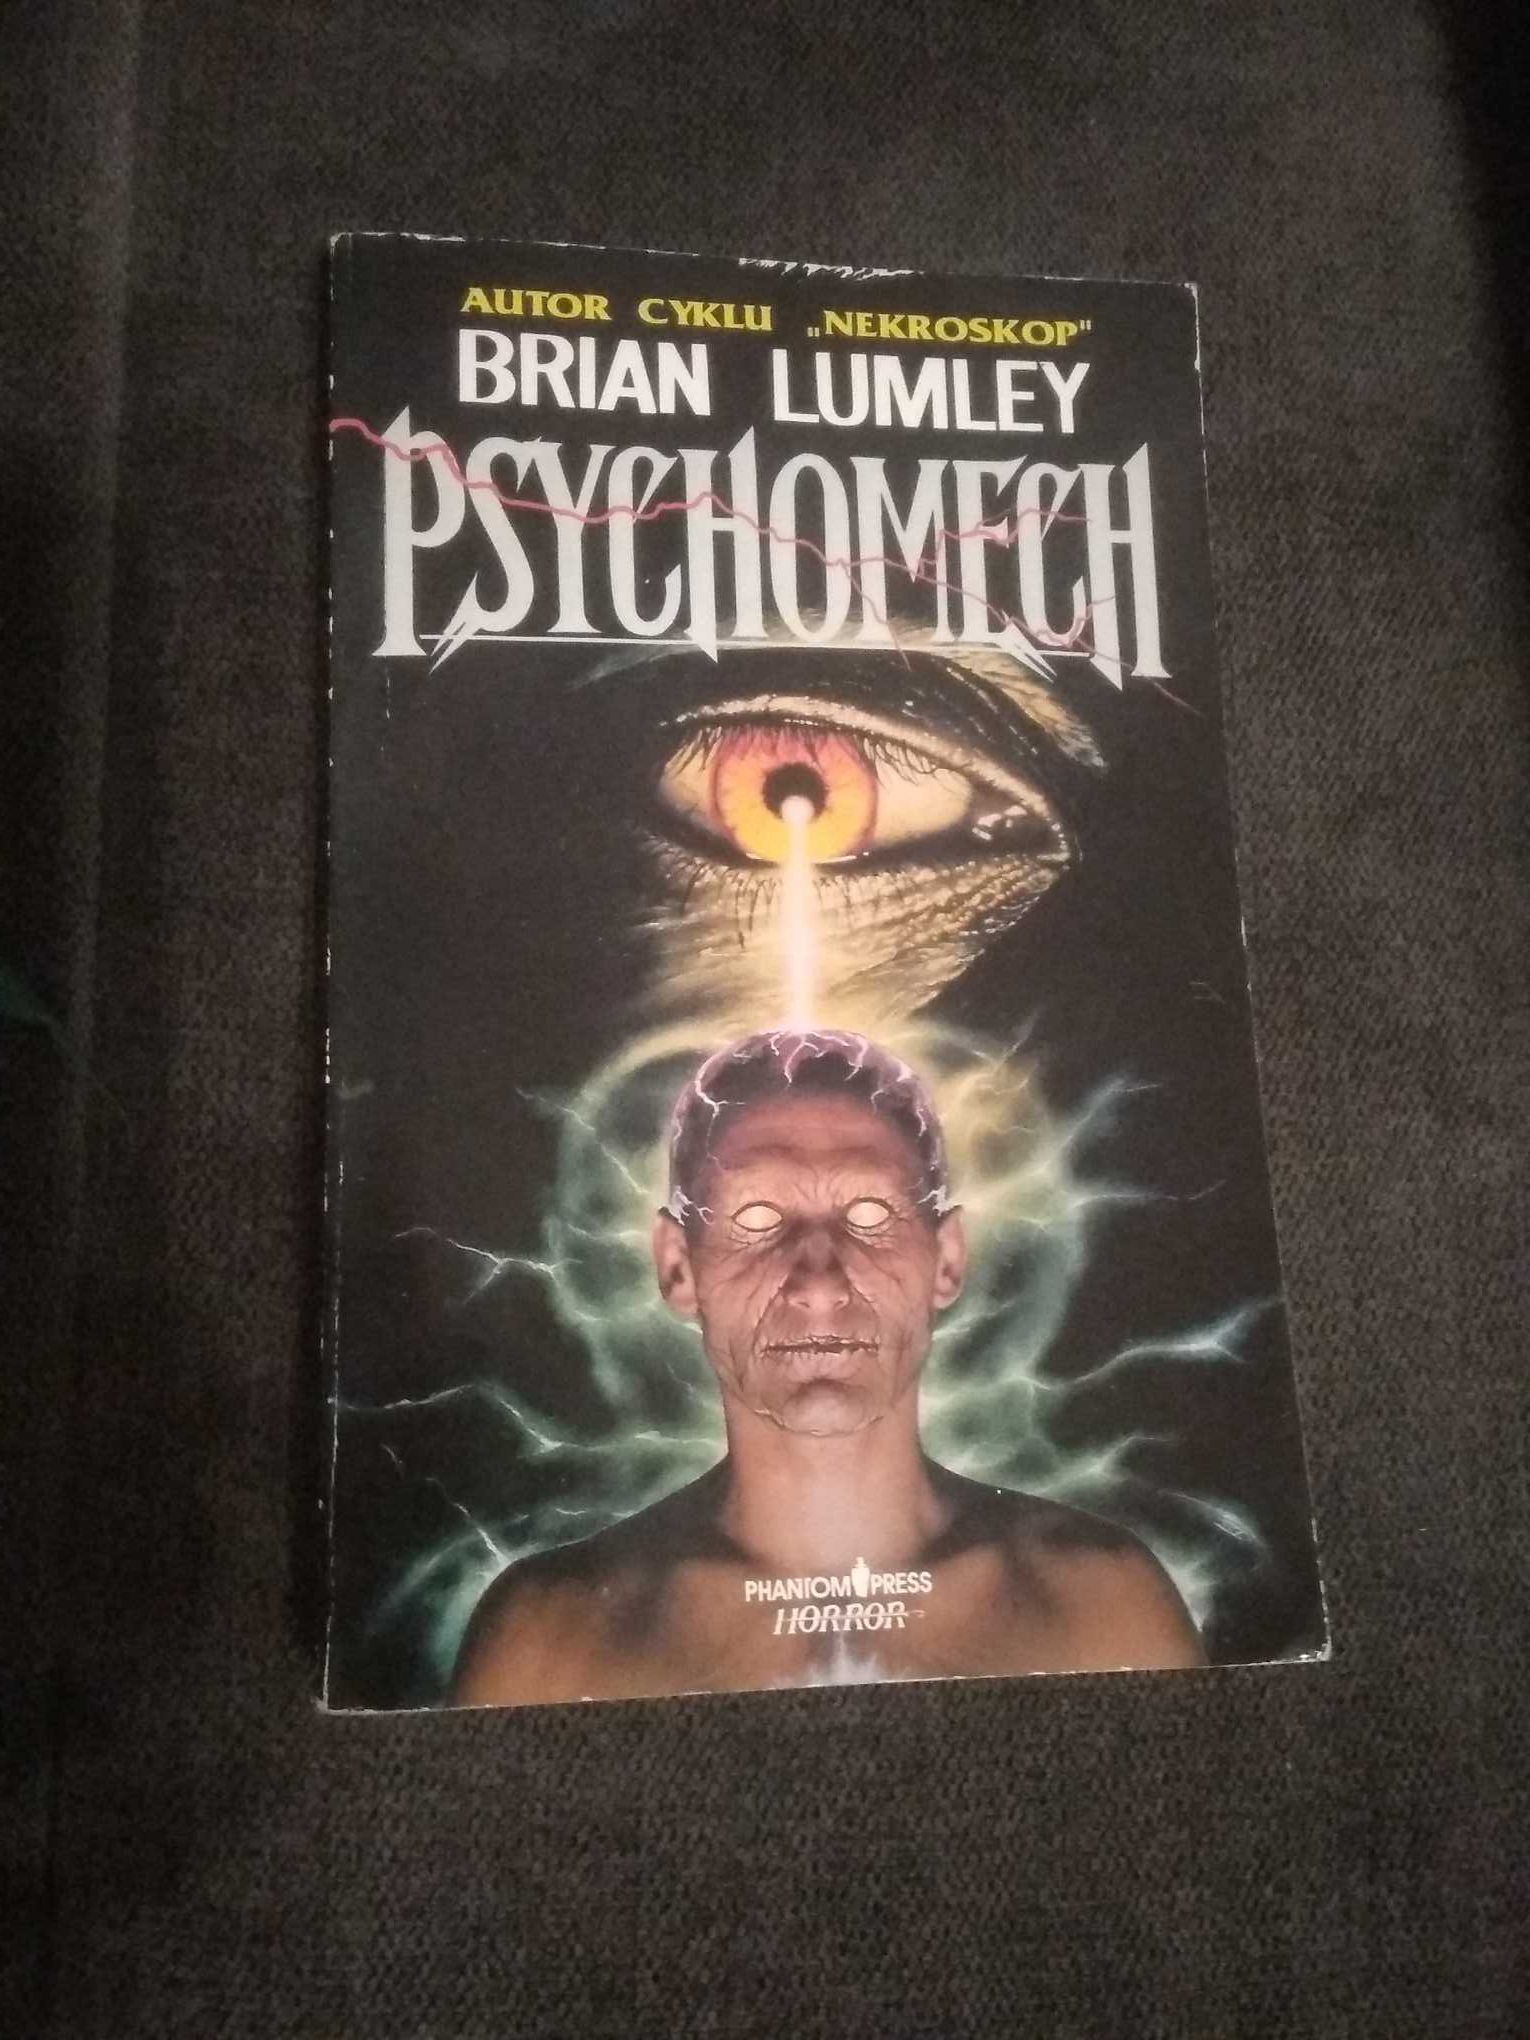 Brian Lumley, Psychomech